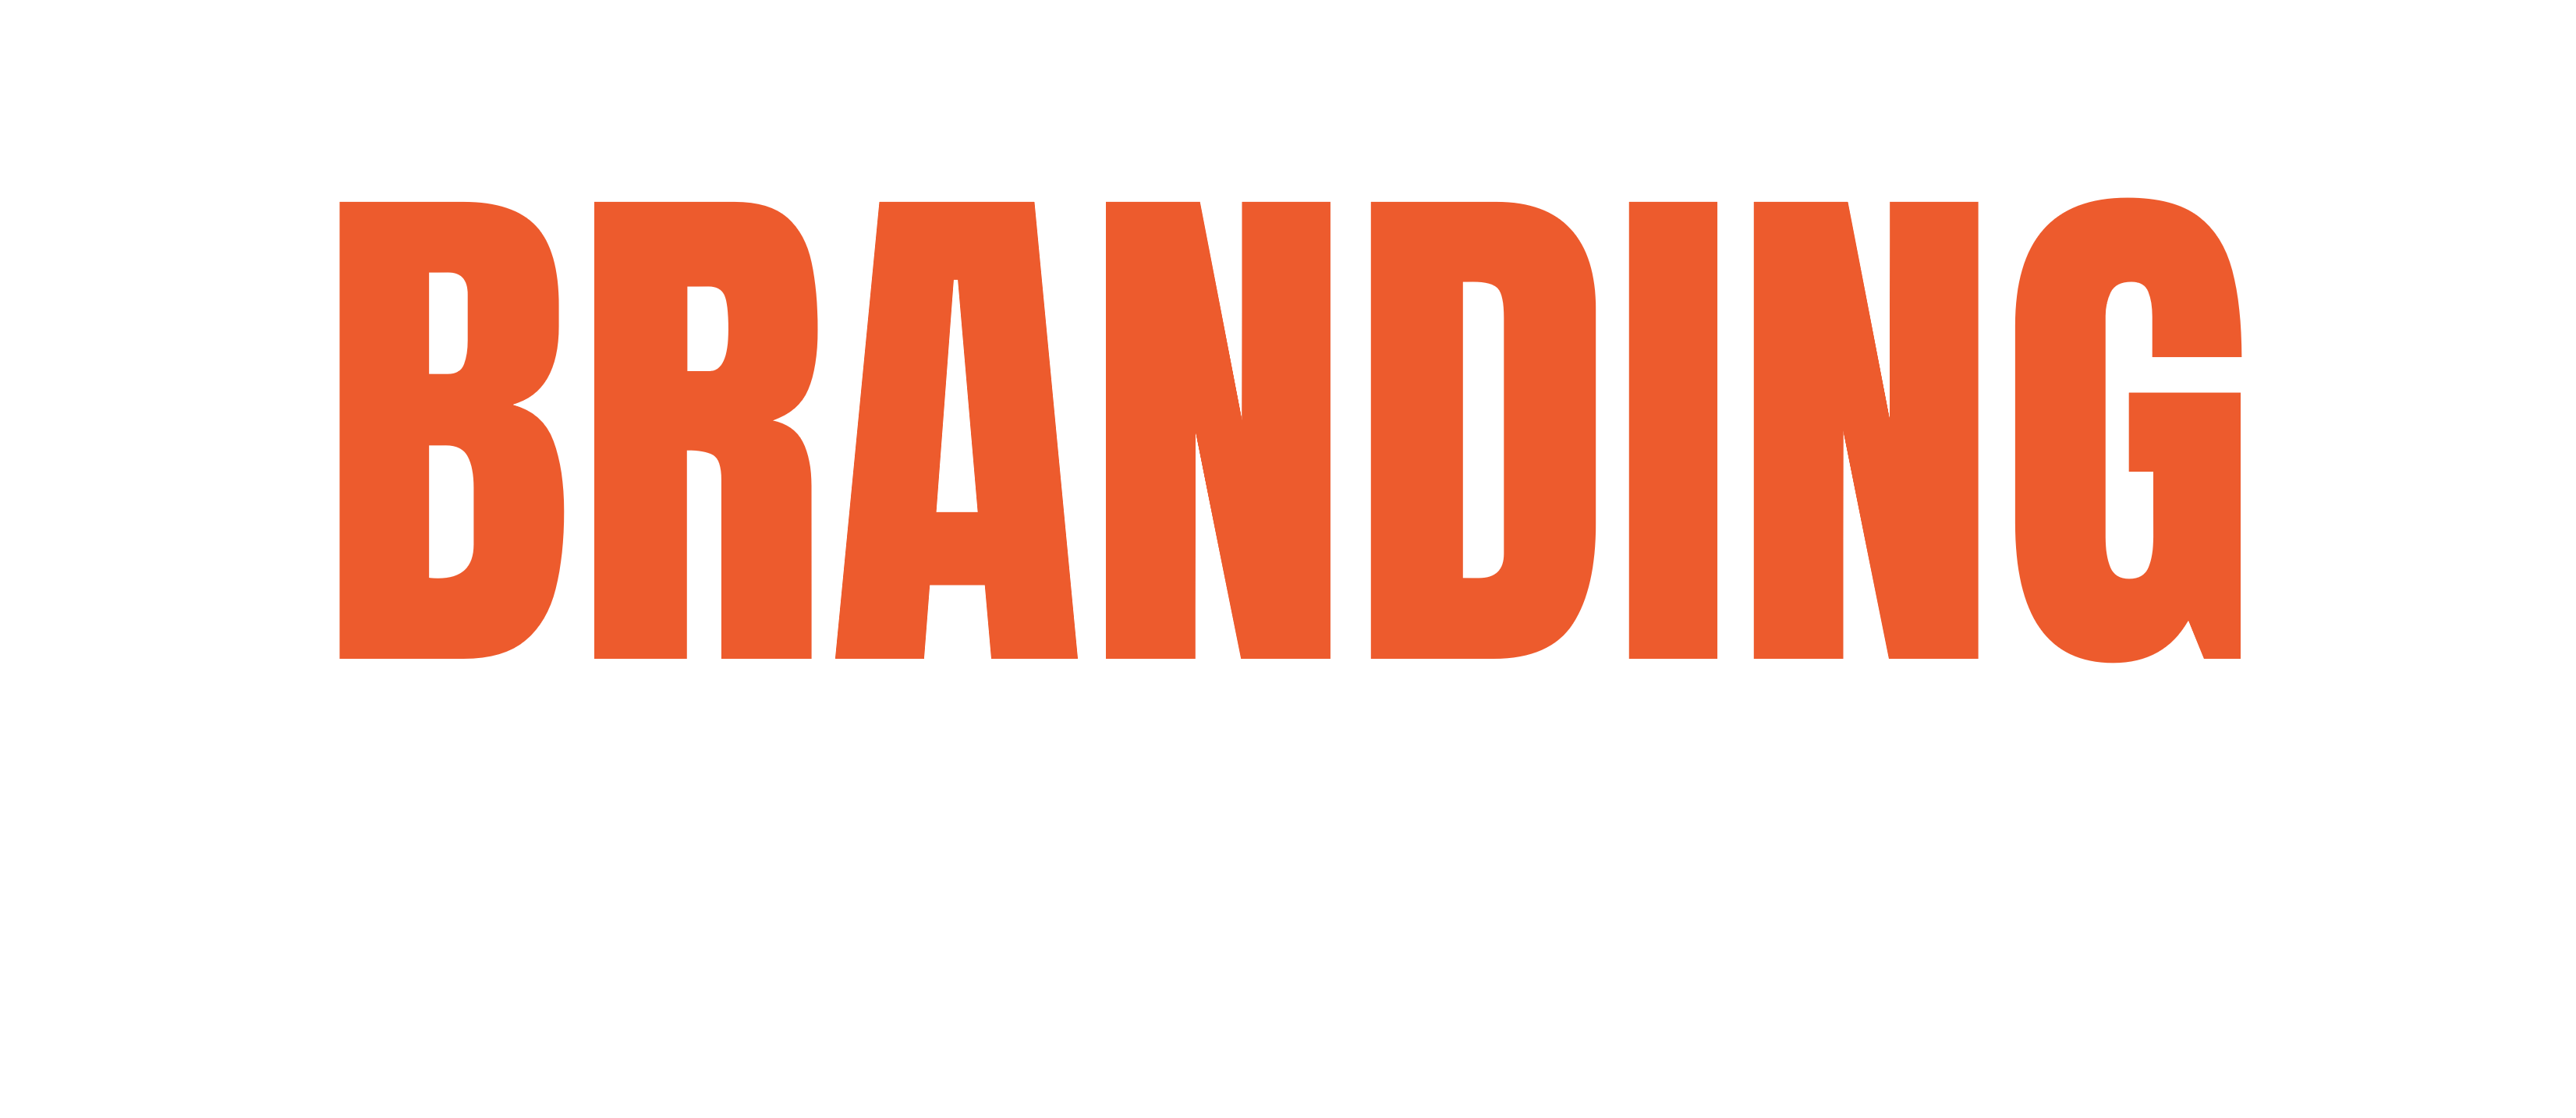 branding transparent